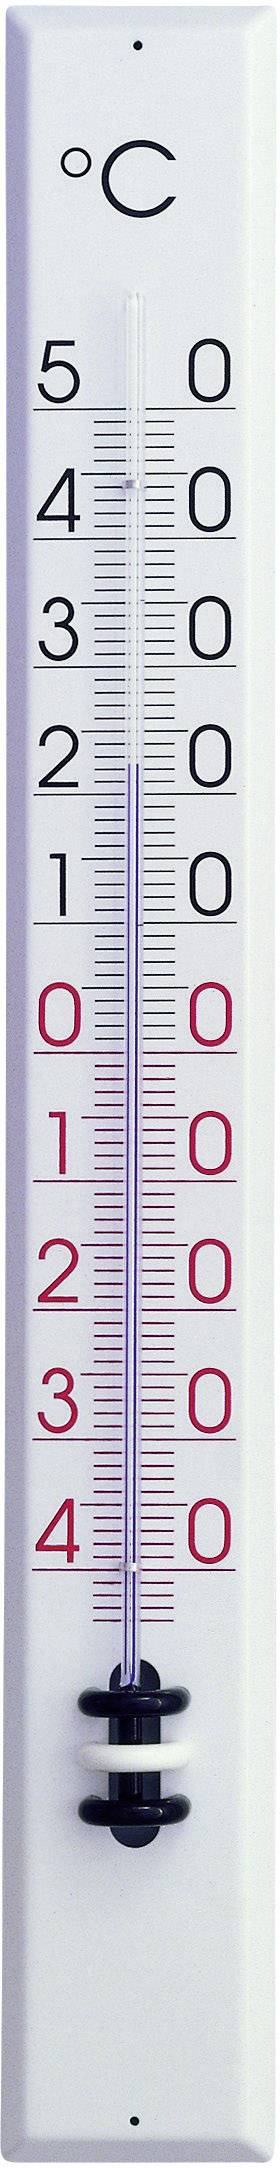 TFA-DOSTMANN Wand Thermometer TFA 12.2015 Weiß